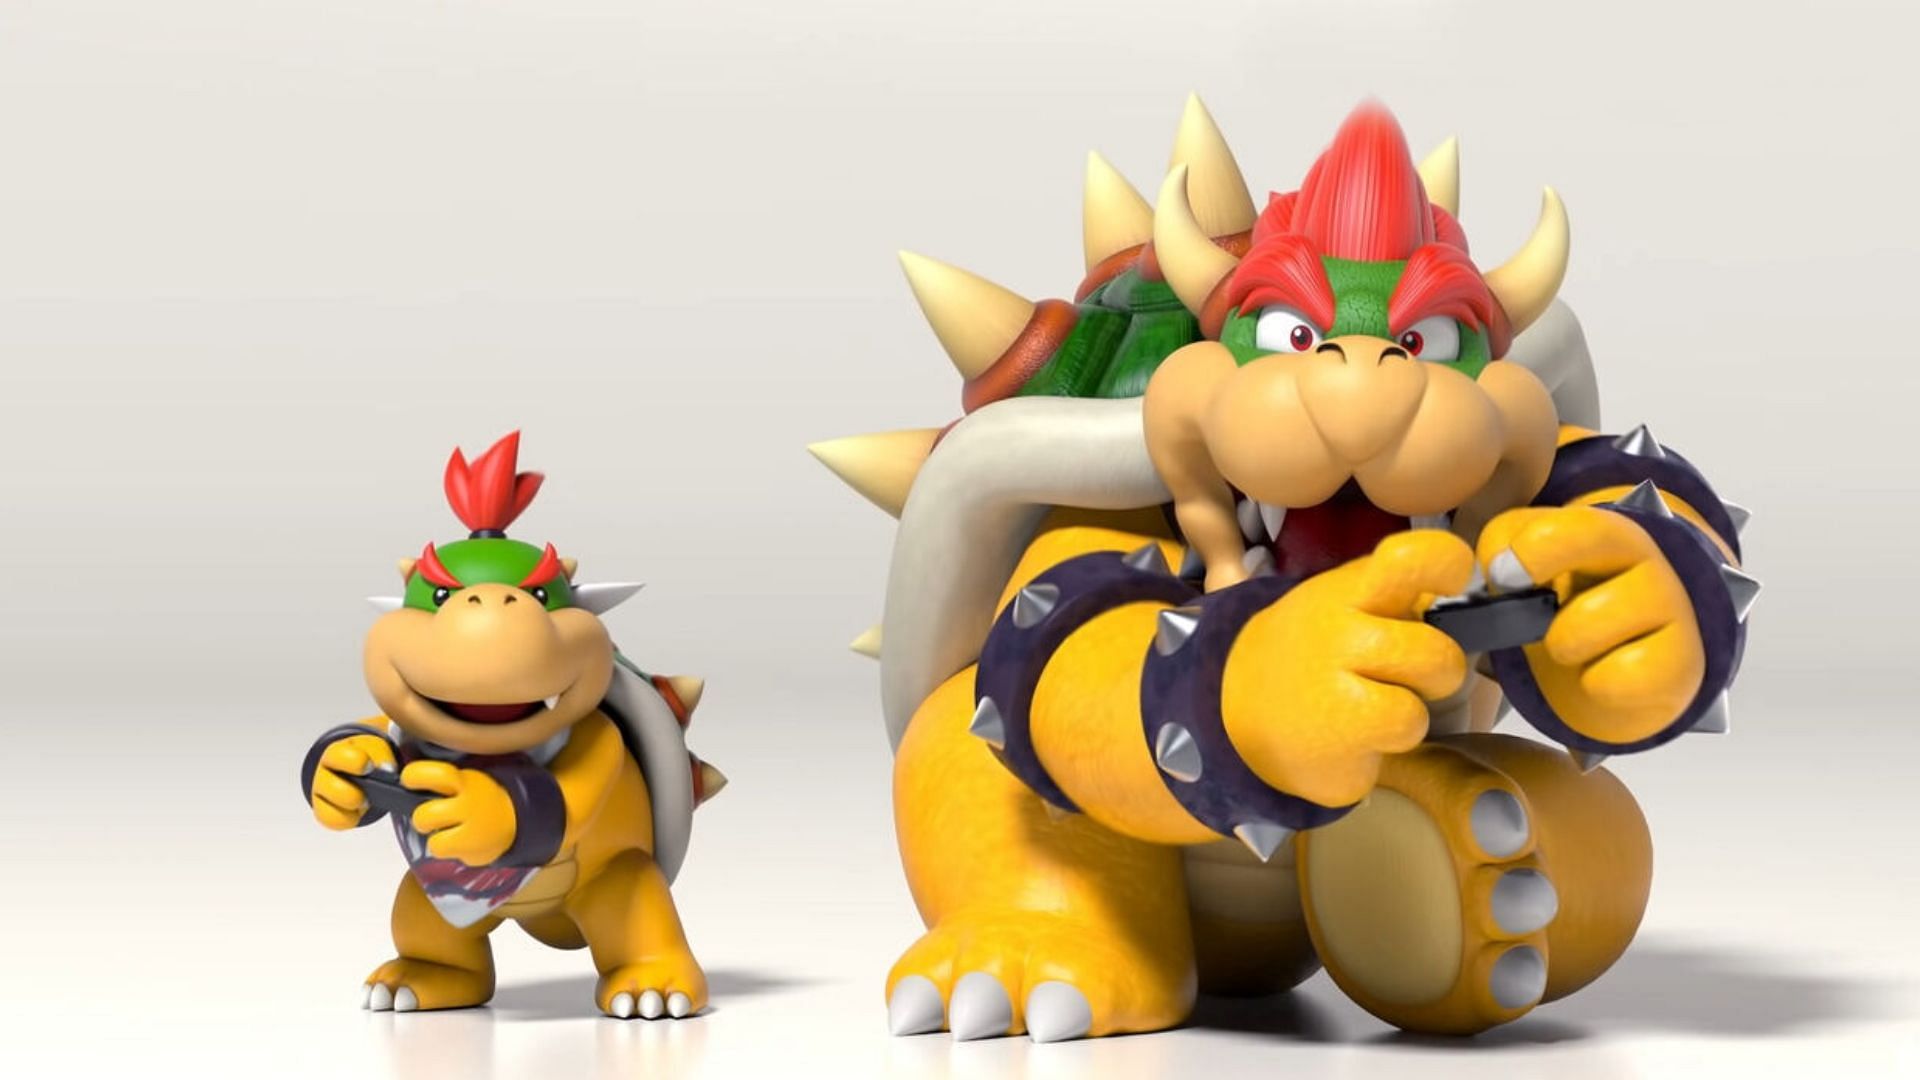 Bowser Jr. (left) is more charismatic than his dad (Image via Nintendo)